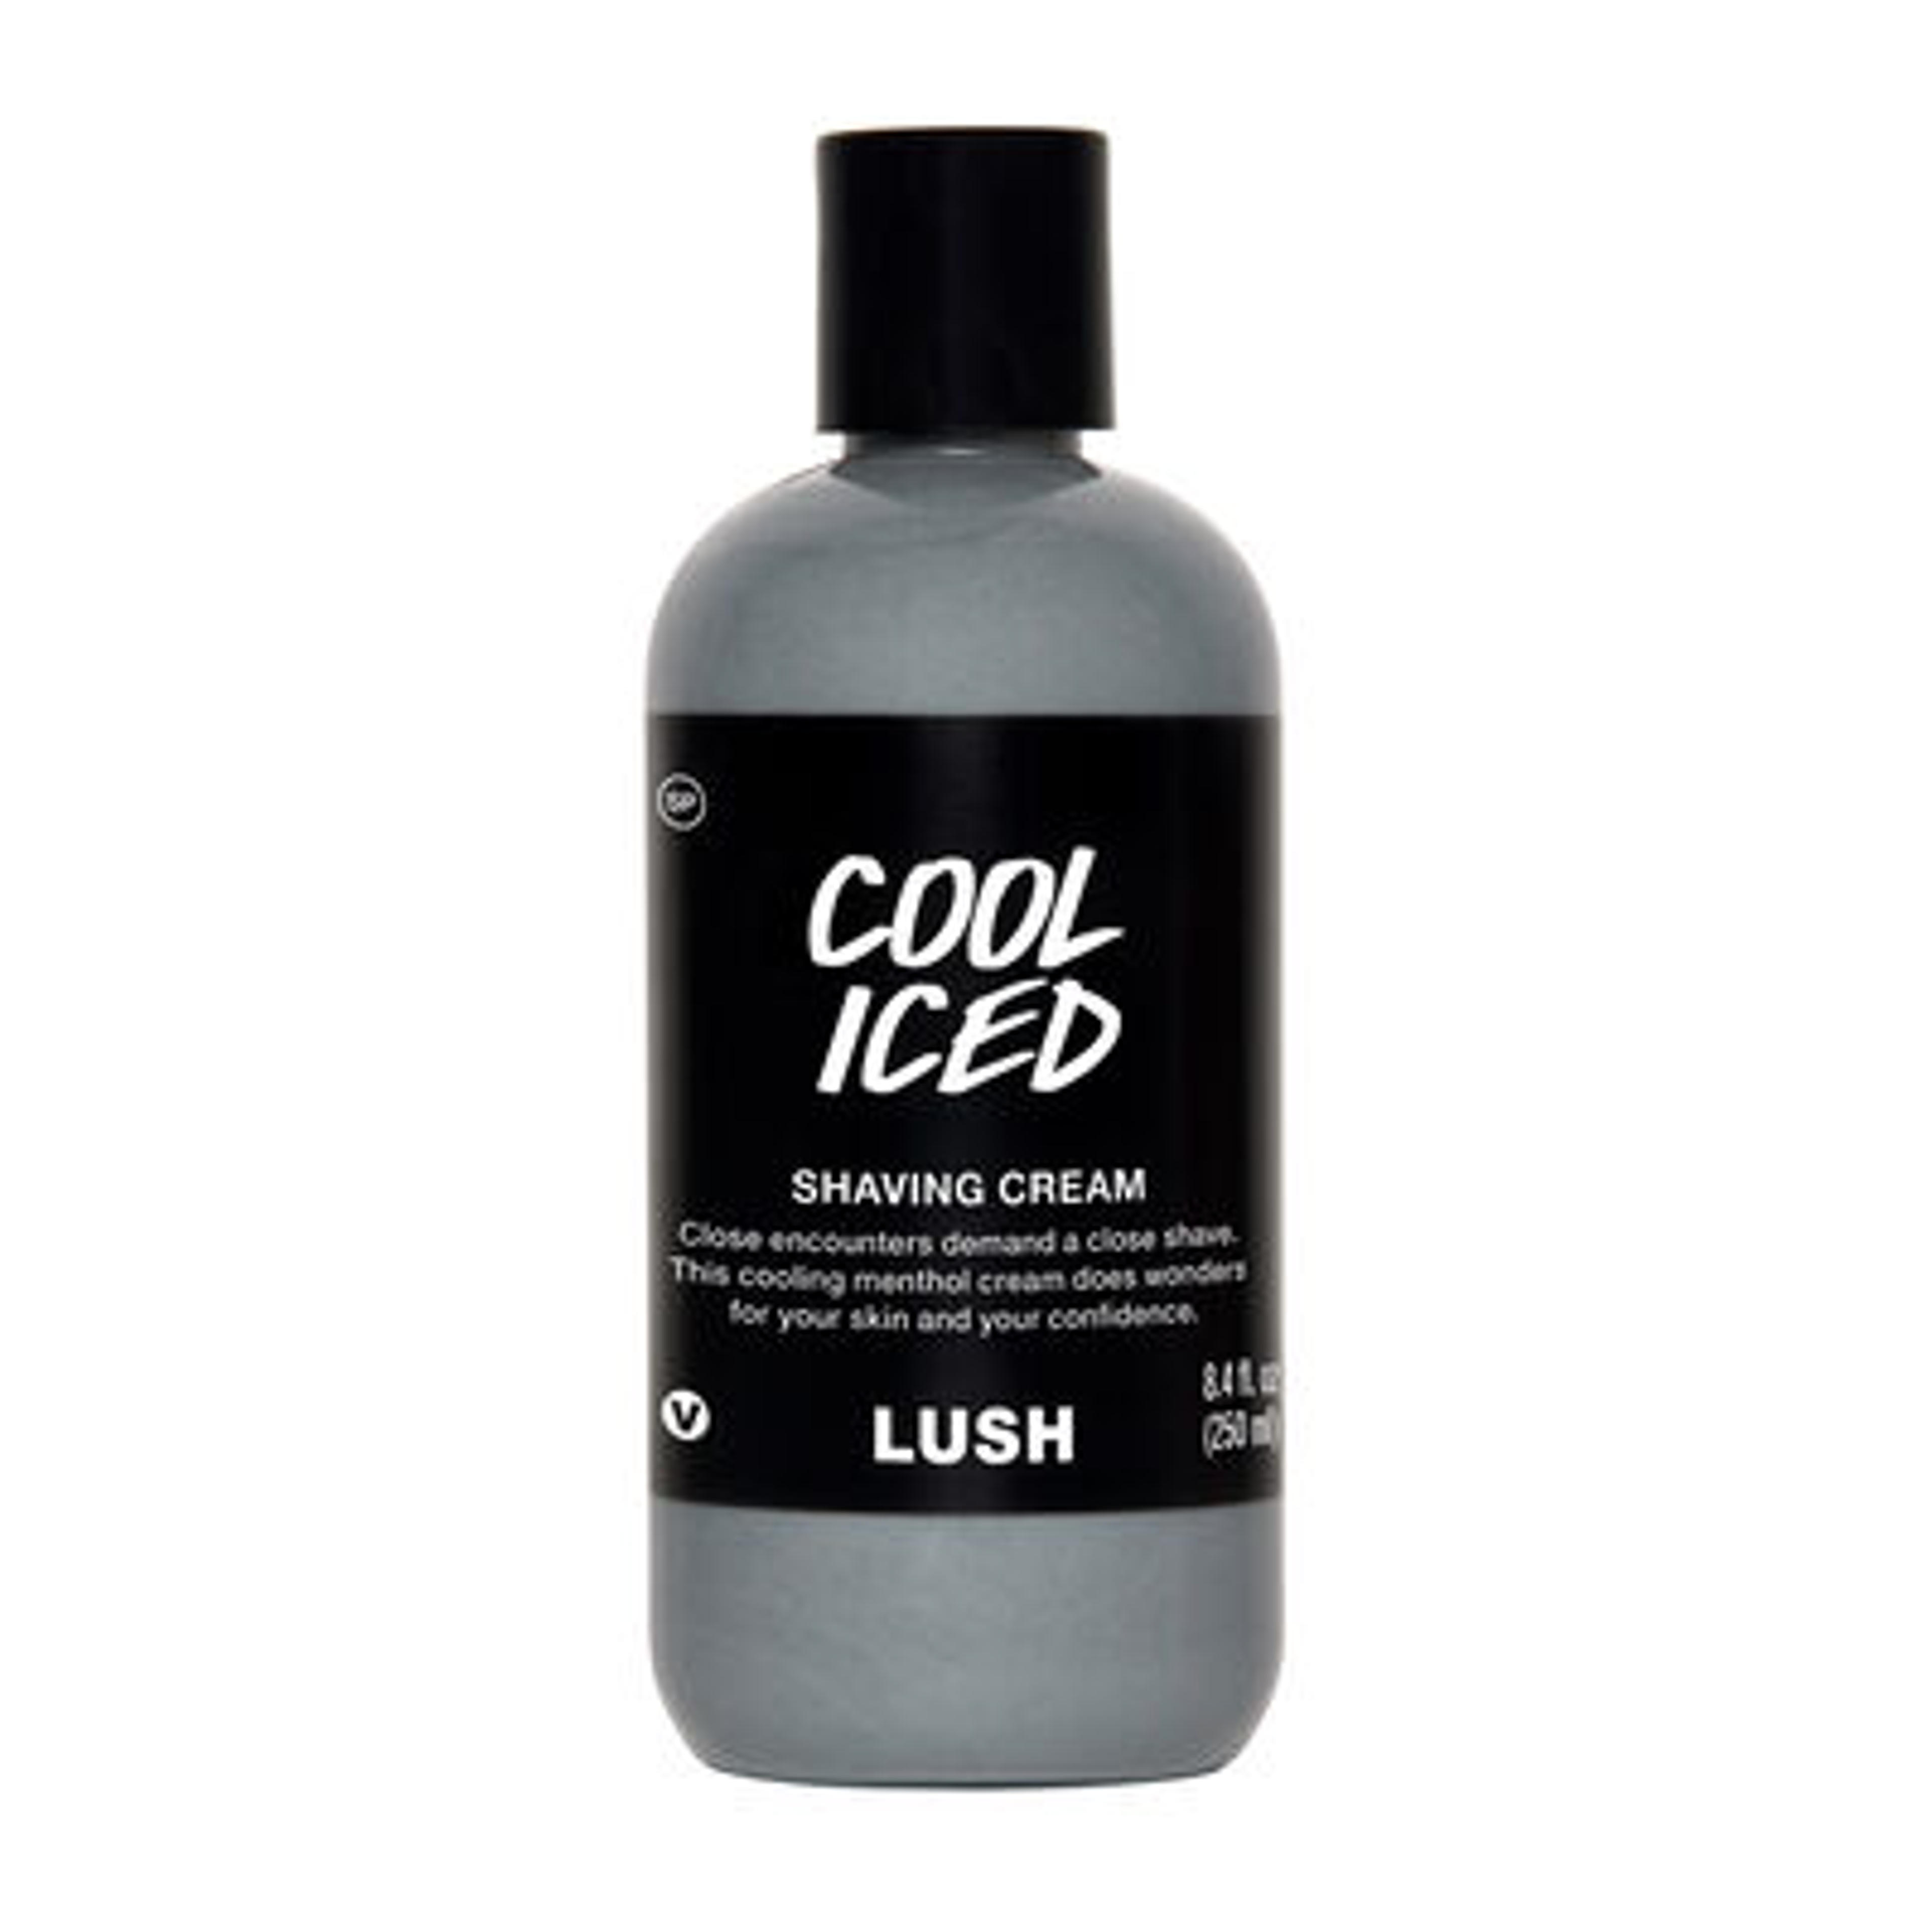 Cool Iced | Shaving Cream | Lush Cosmetics